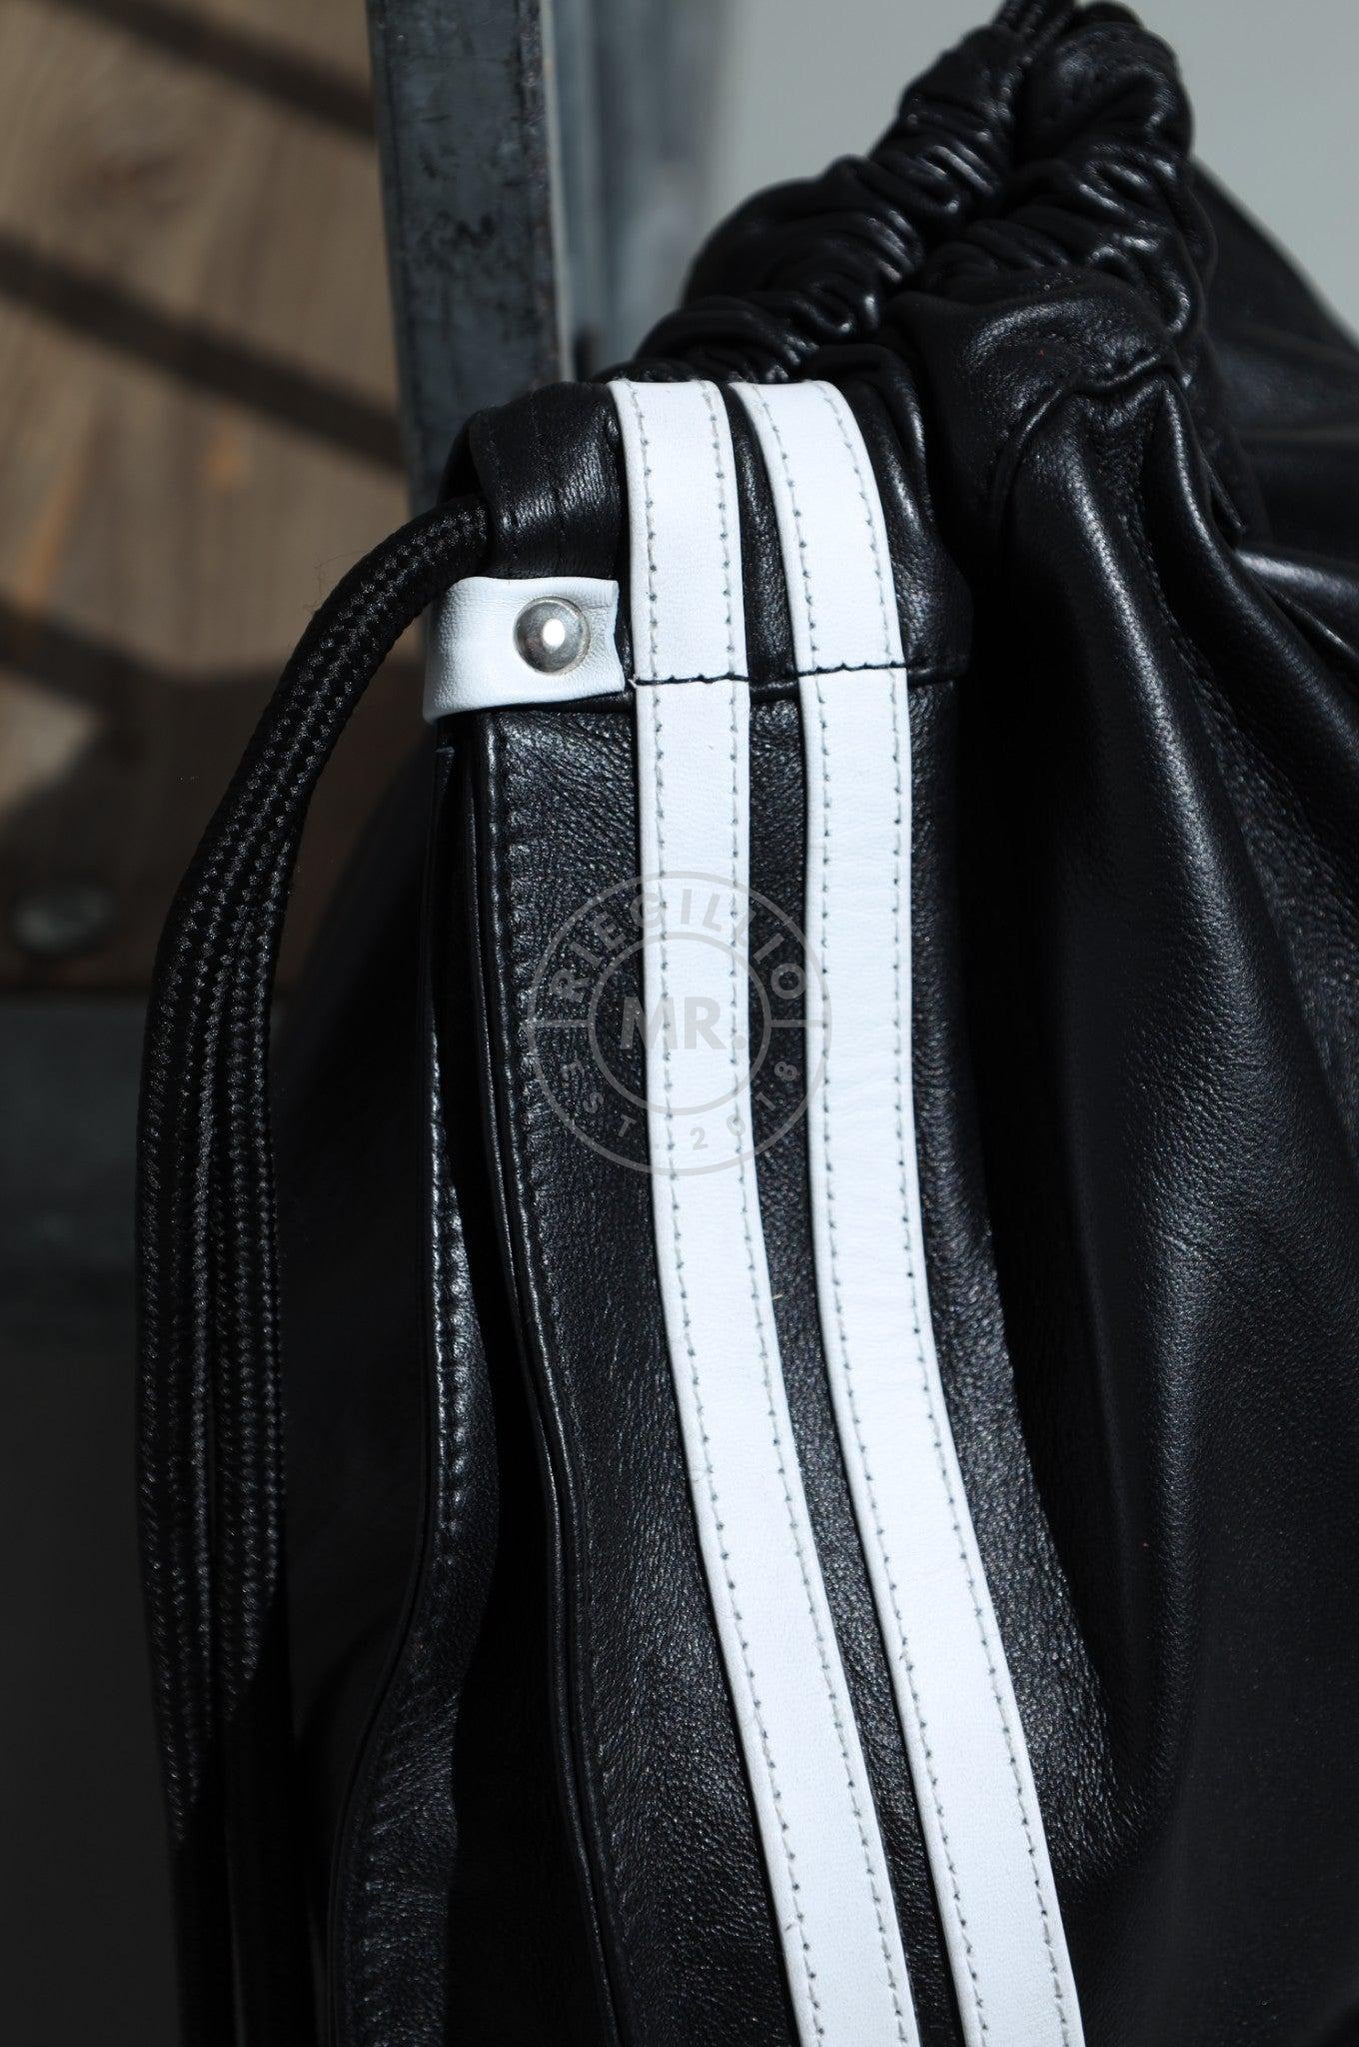 Leather Backpack Black - White Stripes at MR. Riegillio